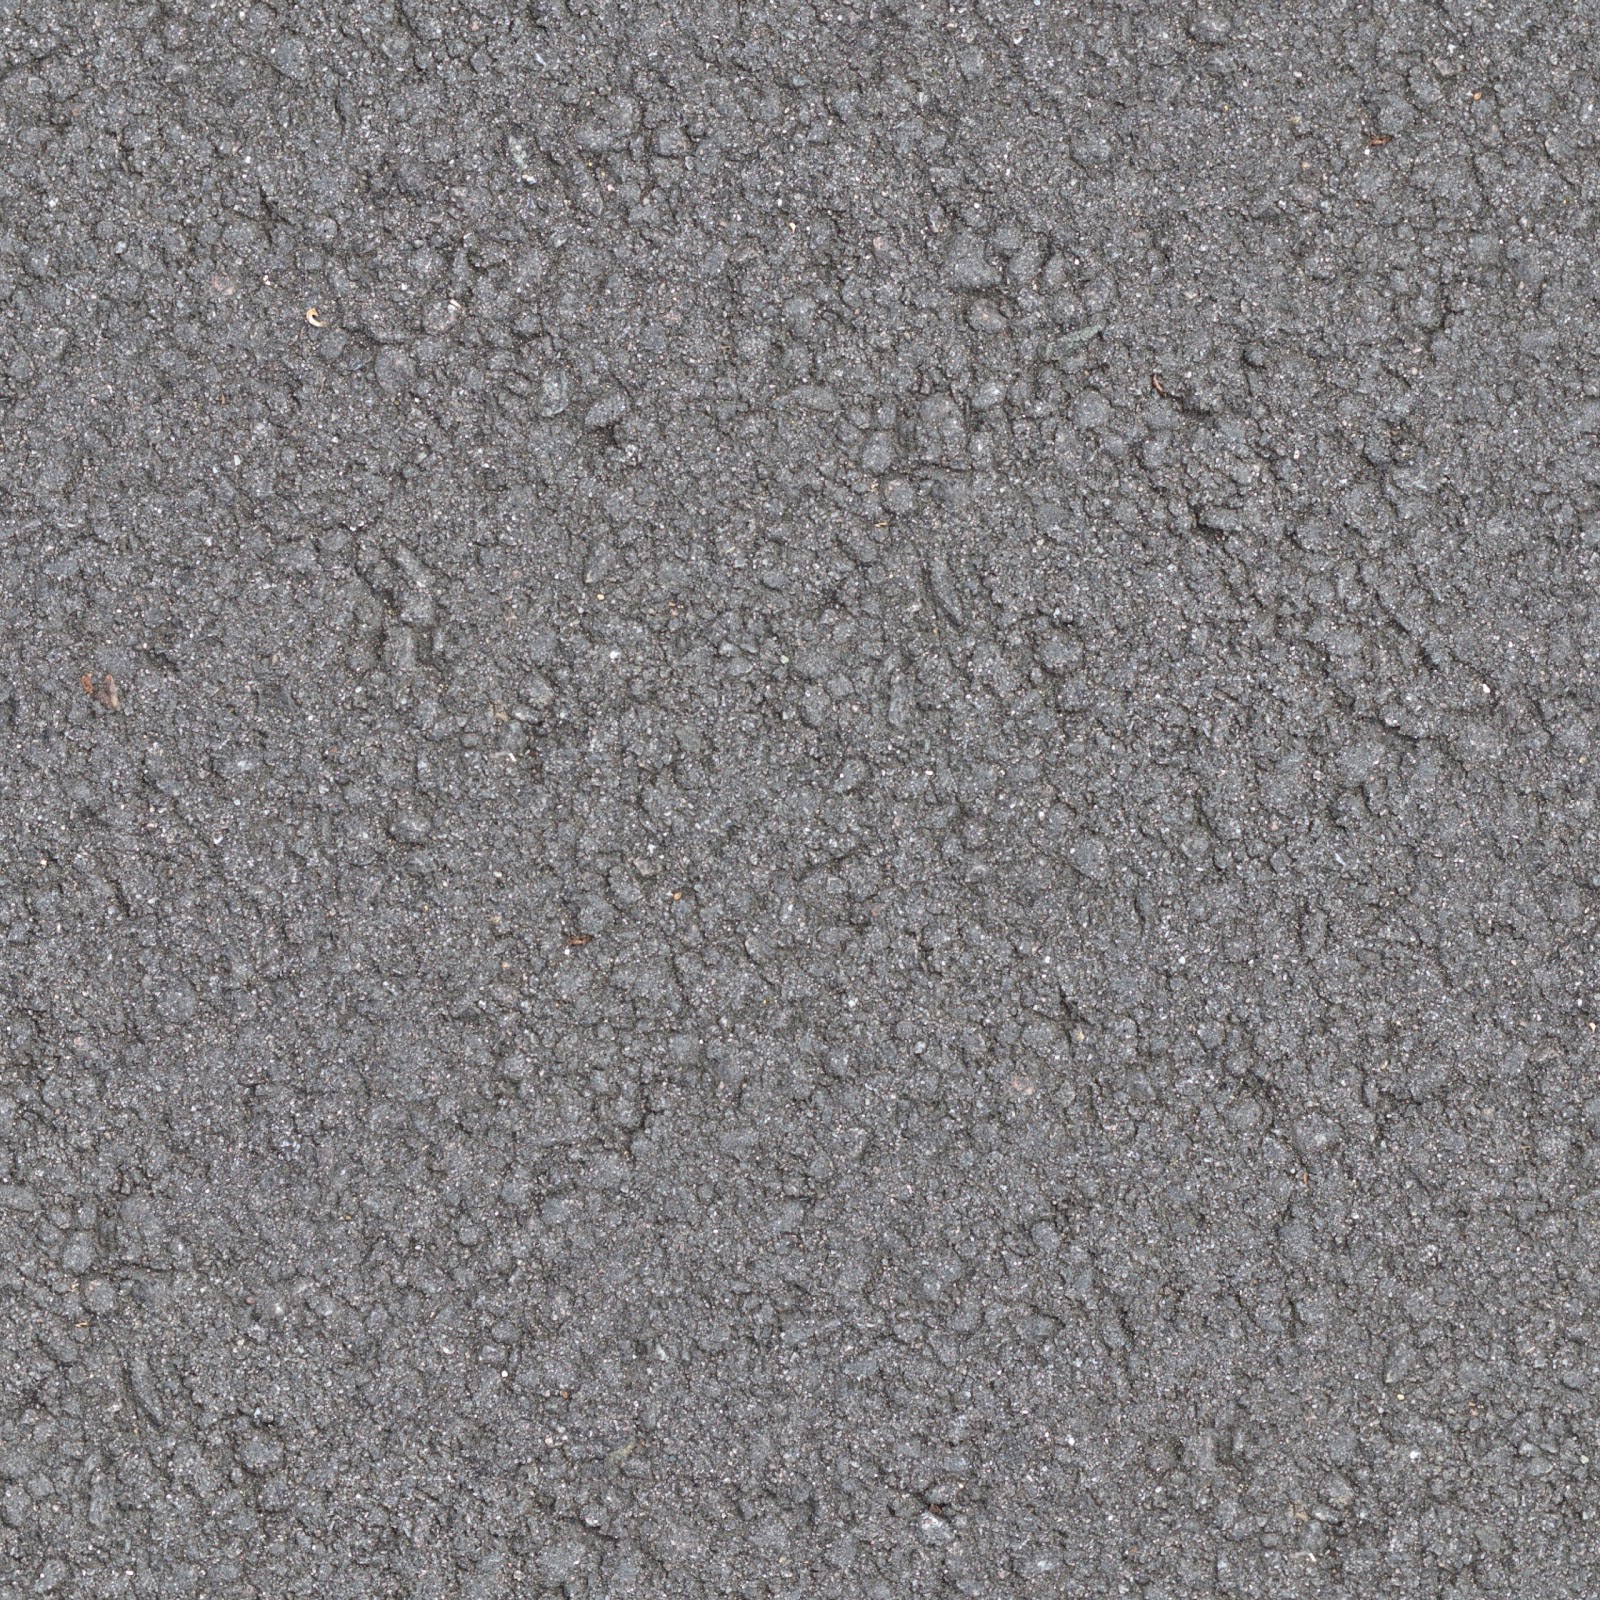 High Resolution Seamless Textures: Seamless asphalt tarmac ...